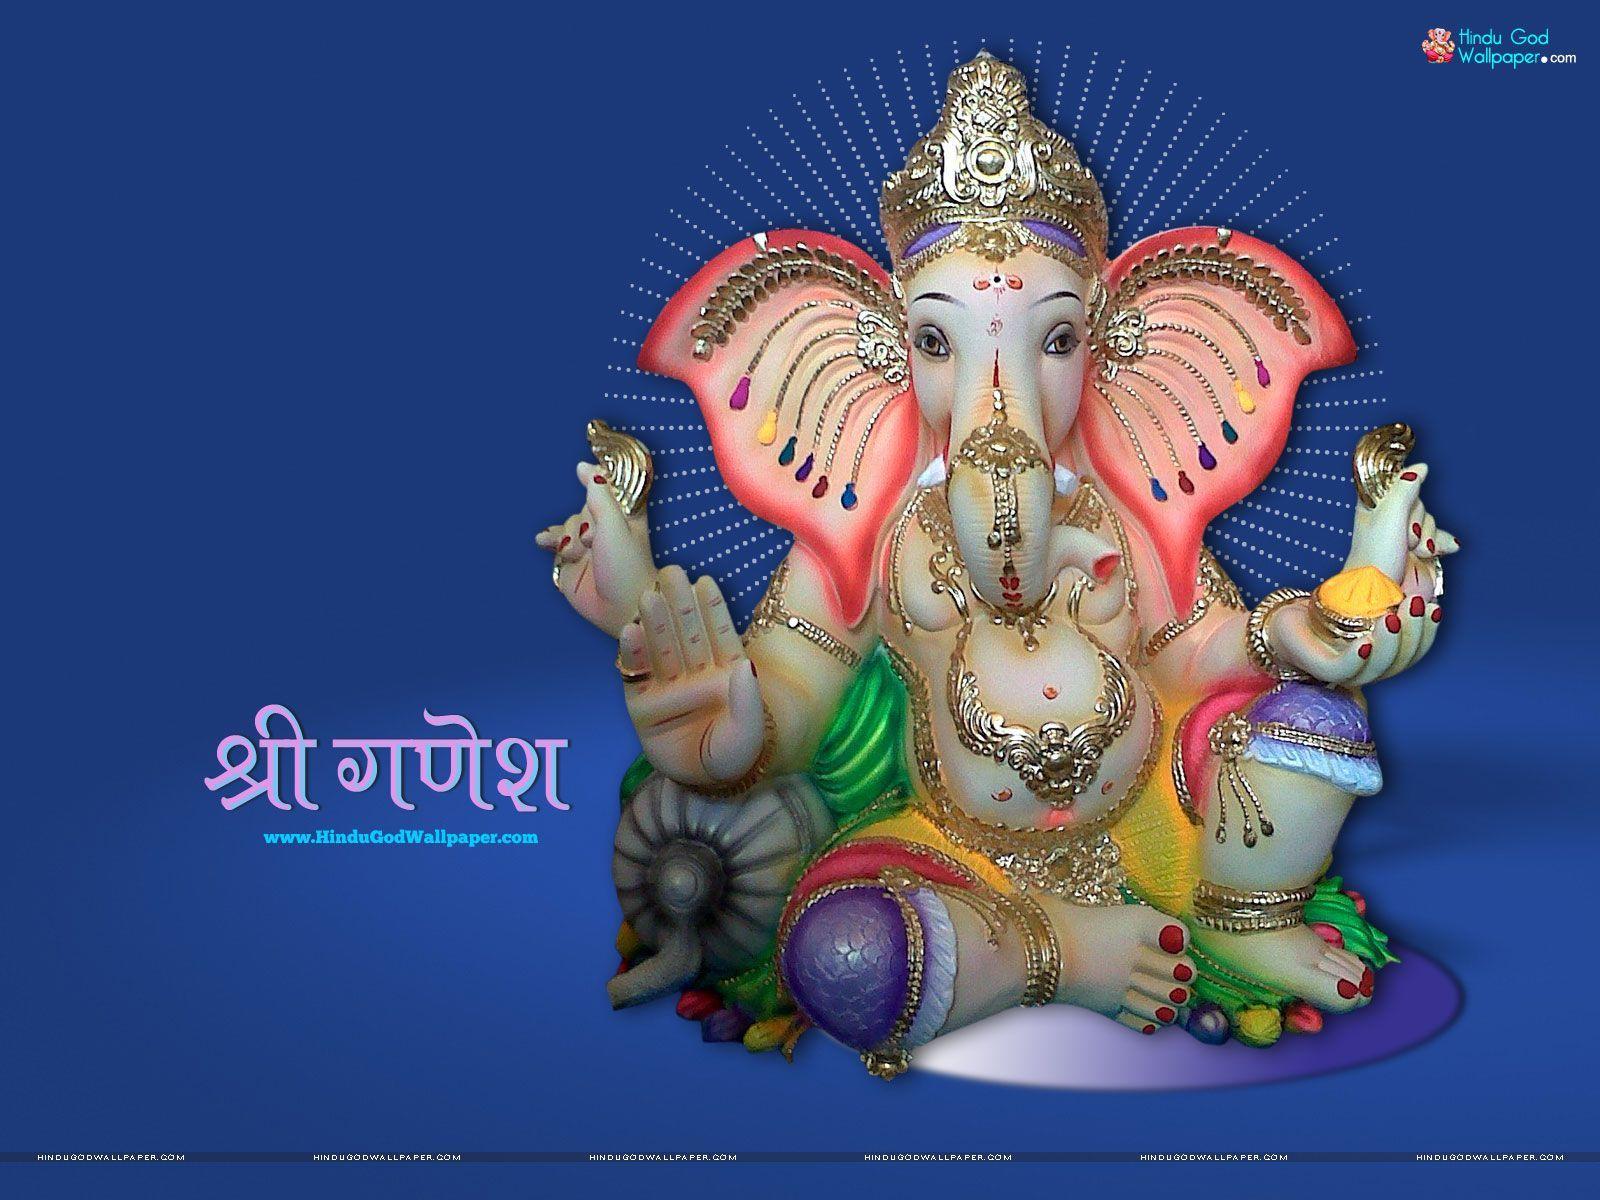 3D Ganesh Wallpaper Free Download. Ganesh wallpaper, Wallpaper free download, Lord krishna HD wallpaper